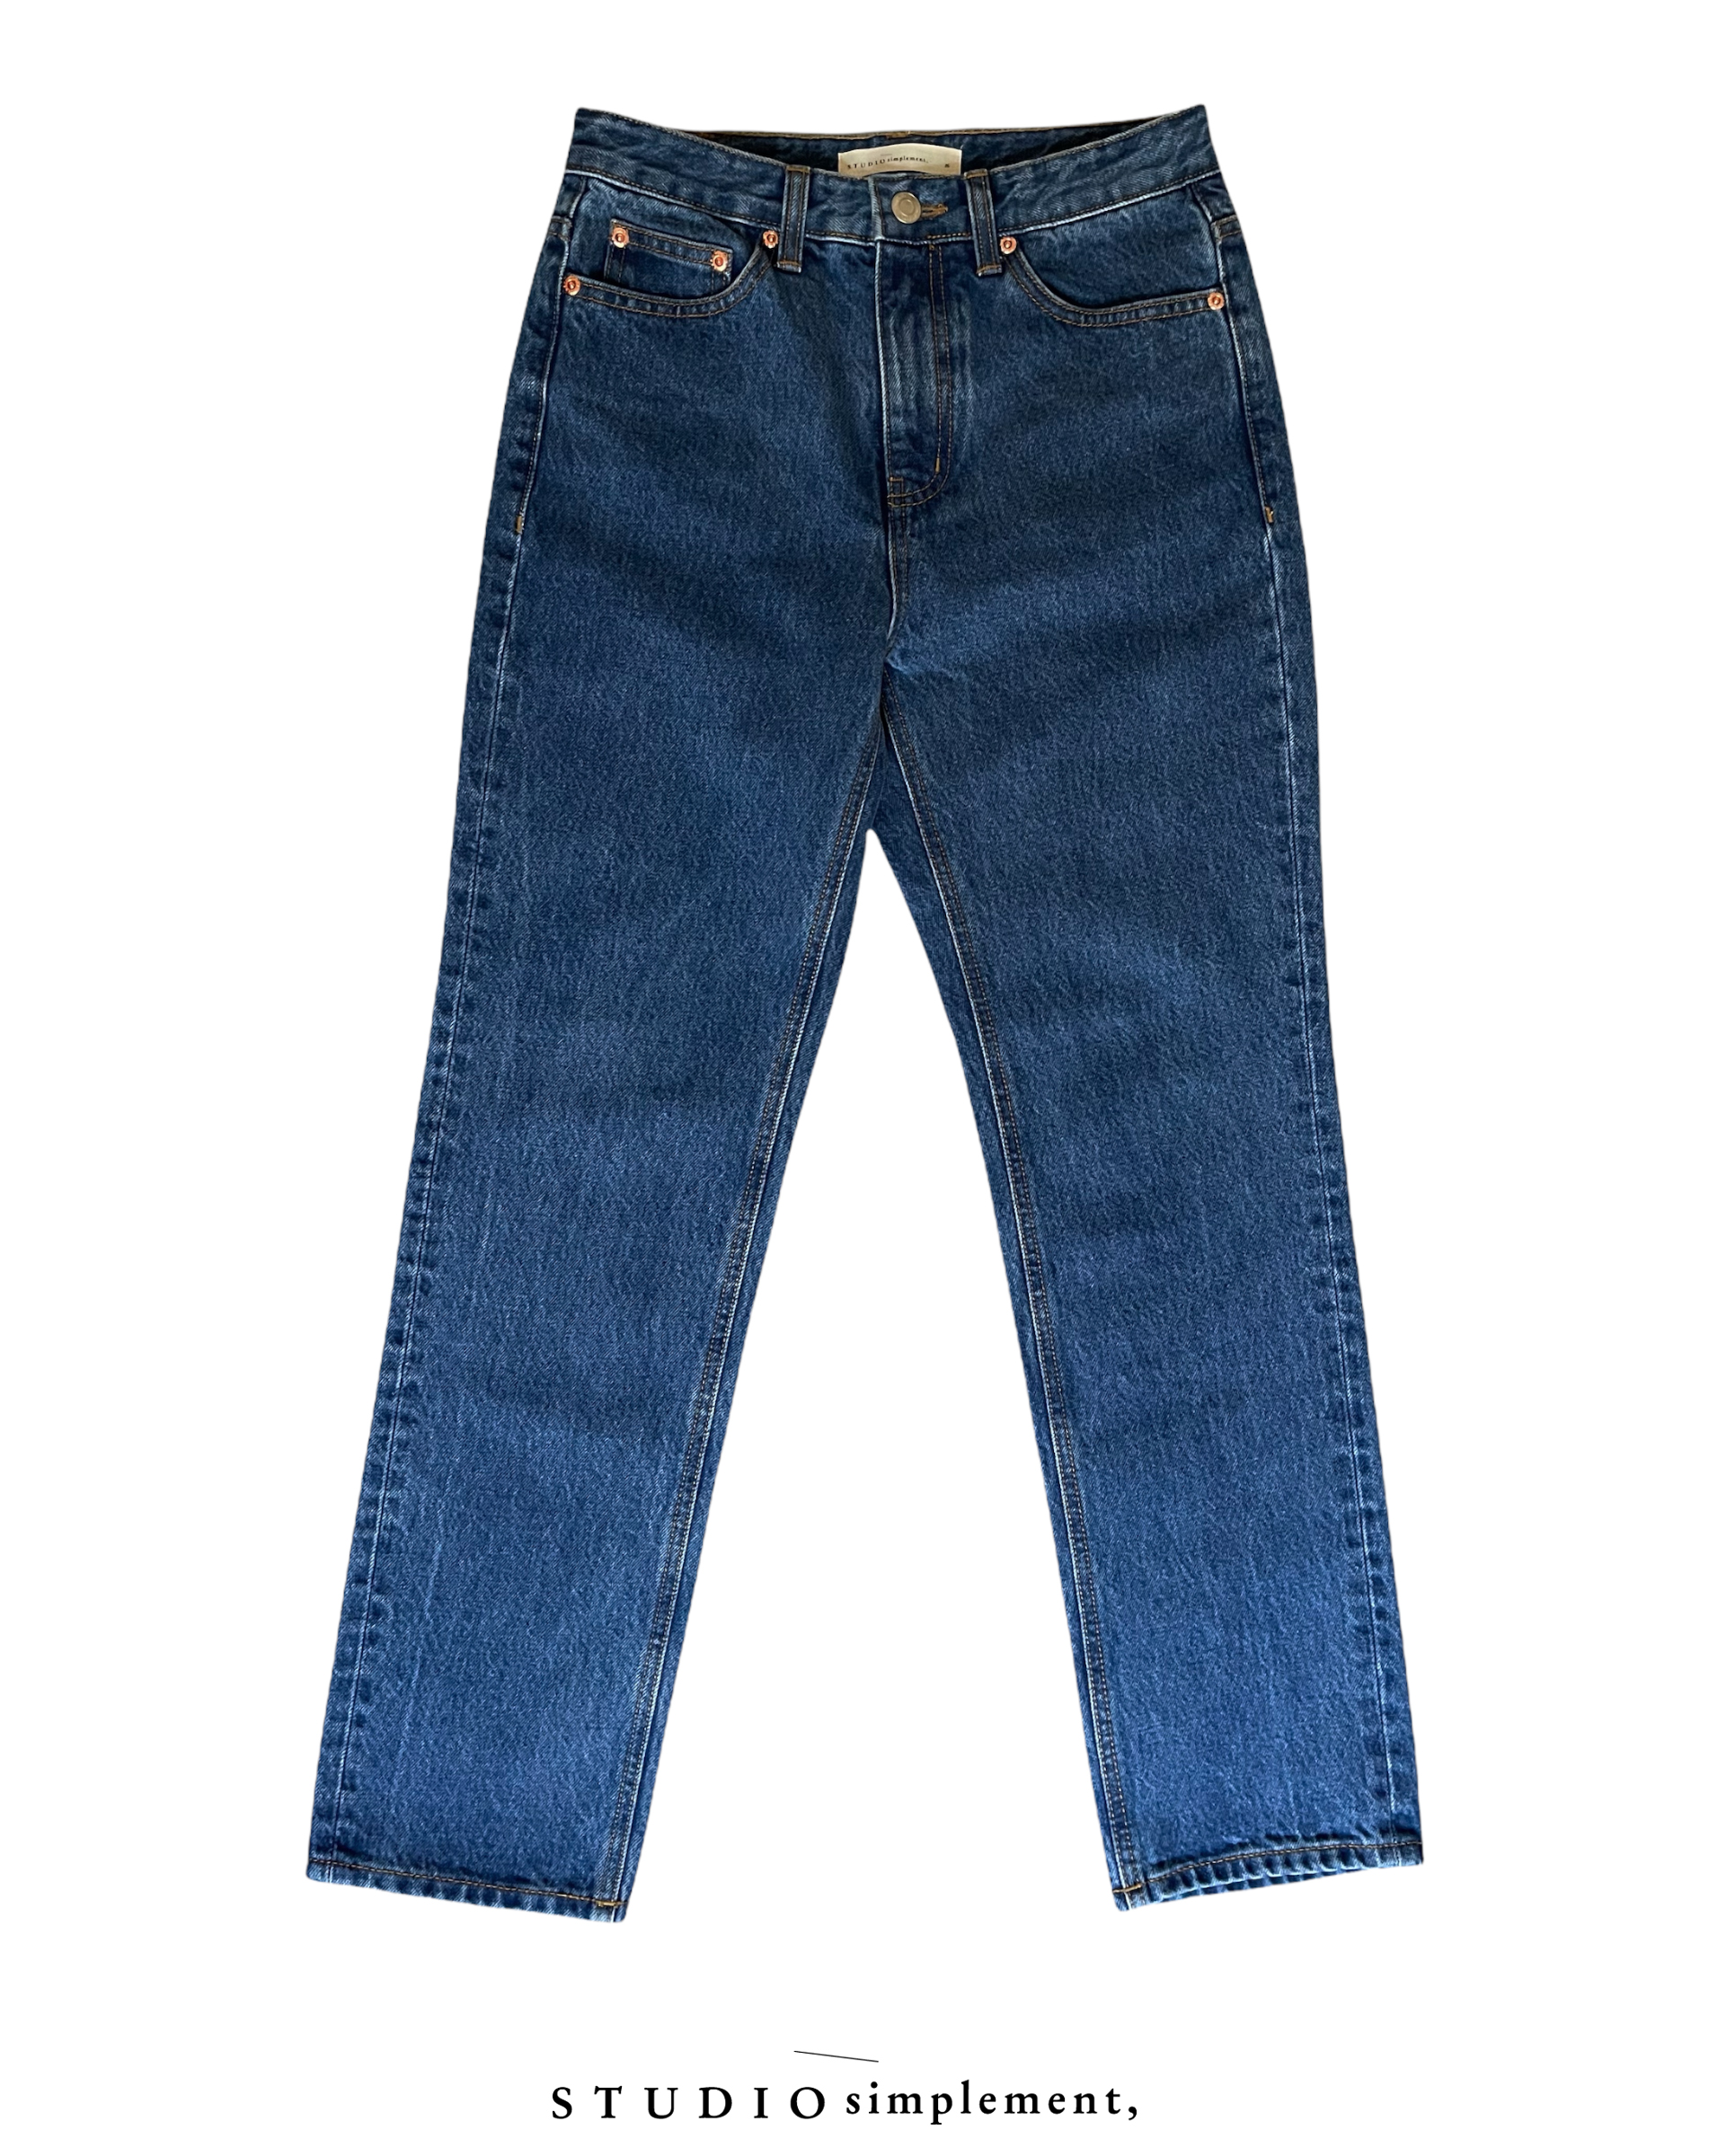 243 Ami Straight Jeans (Fabric by ORTA) - dark blue